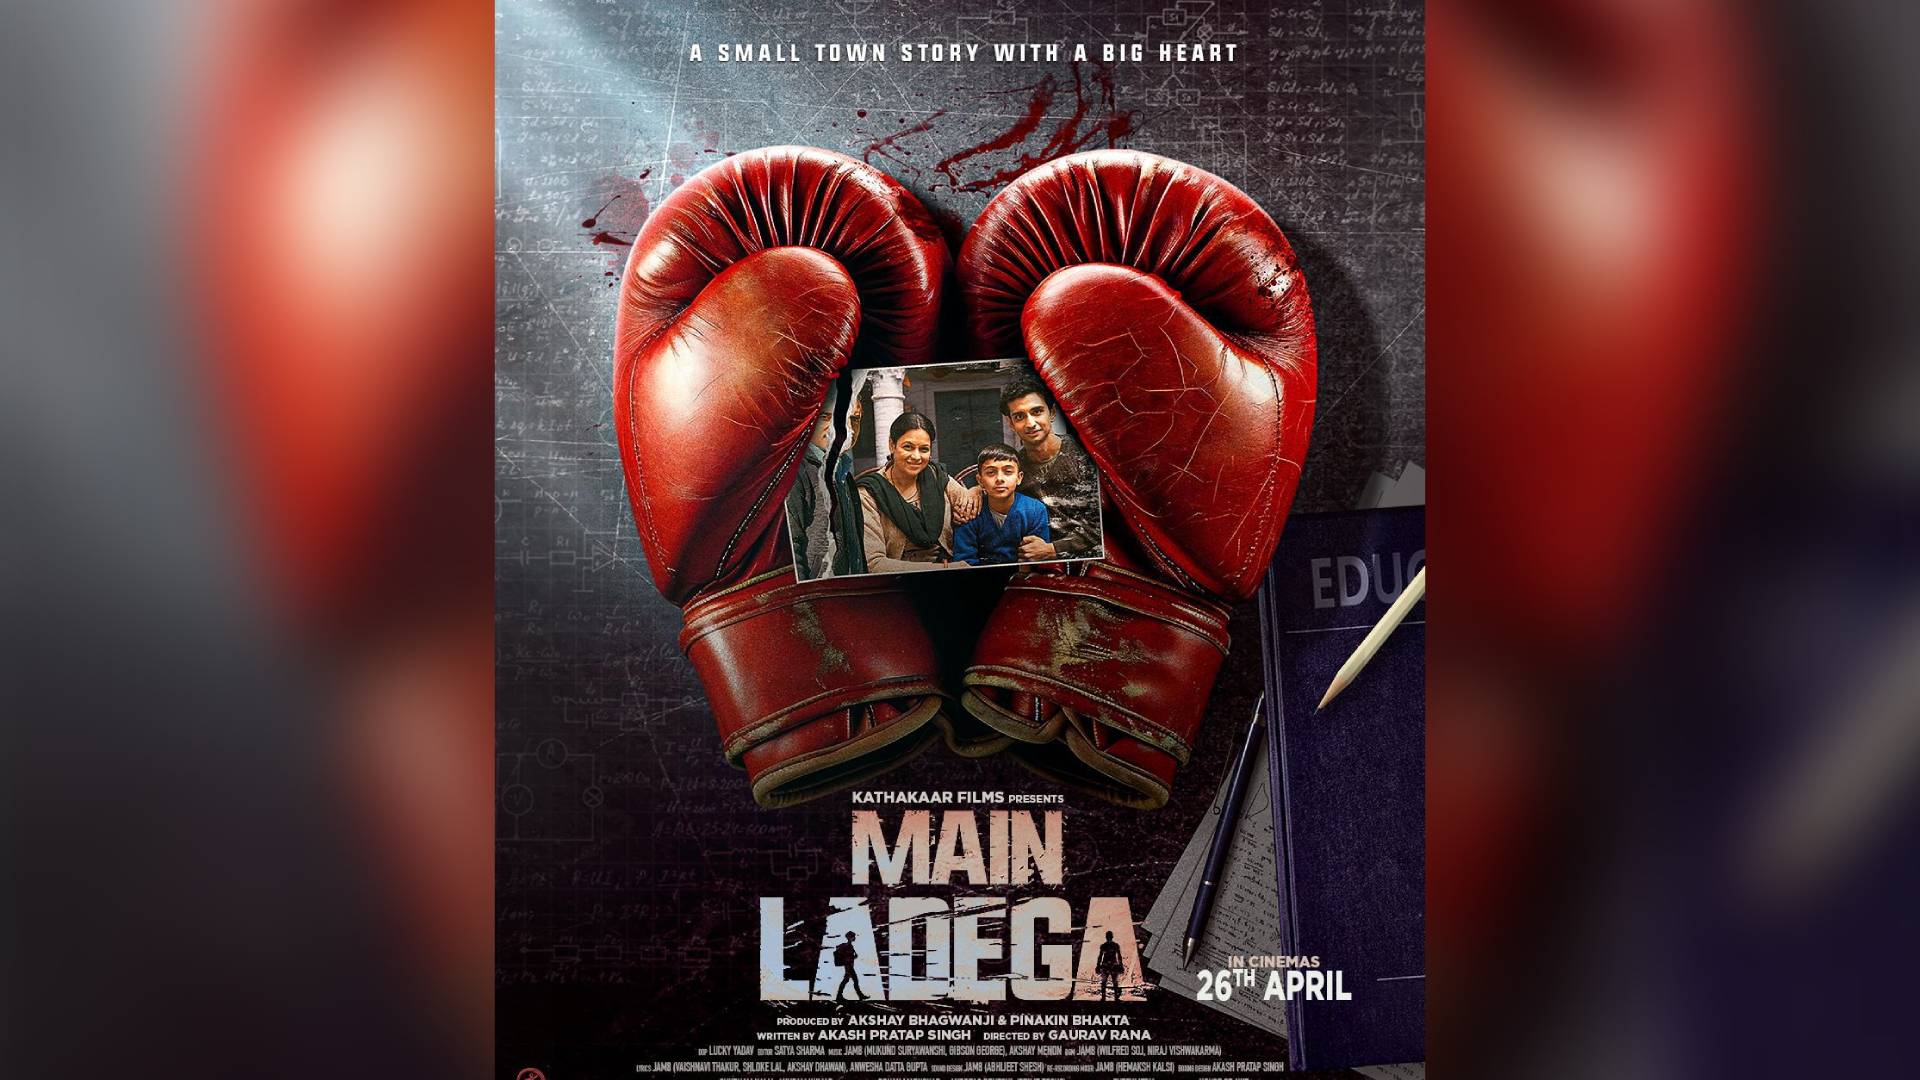 Akash Pratap Singh’s film Main Ladega produced by Akshay Bhagwanji and Pinakin Bhakta, packs a solid punch with its first poster